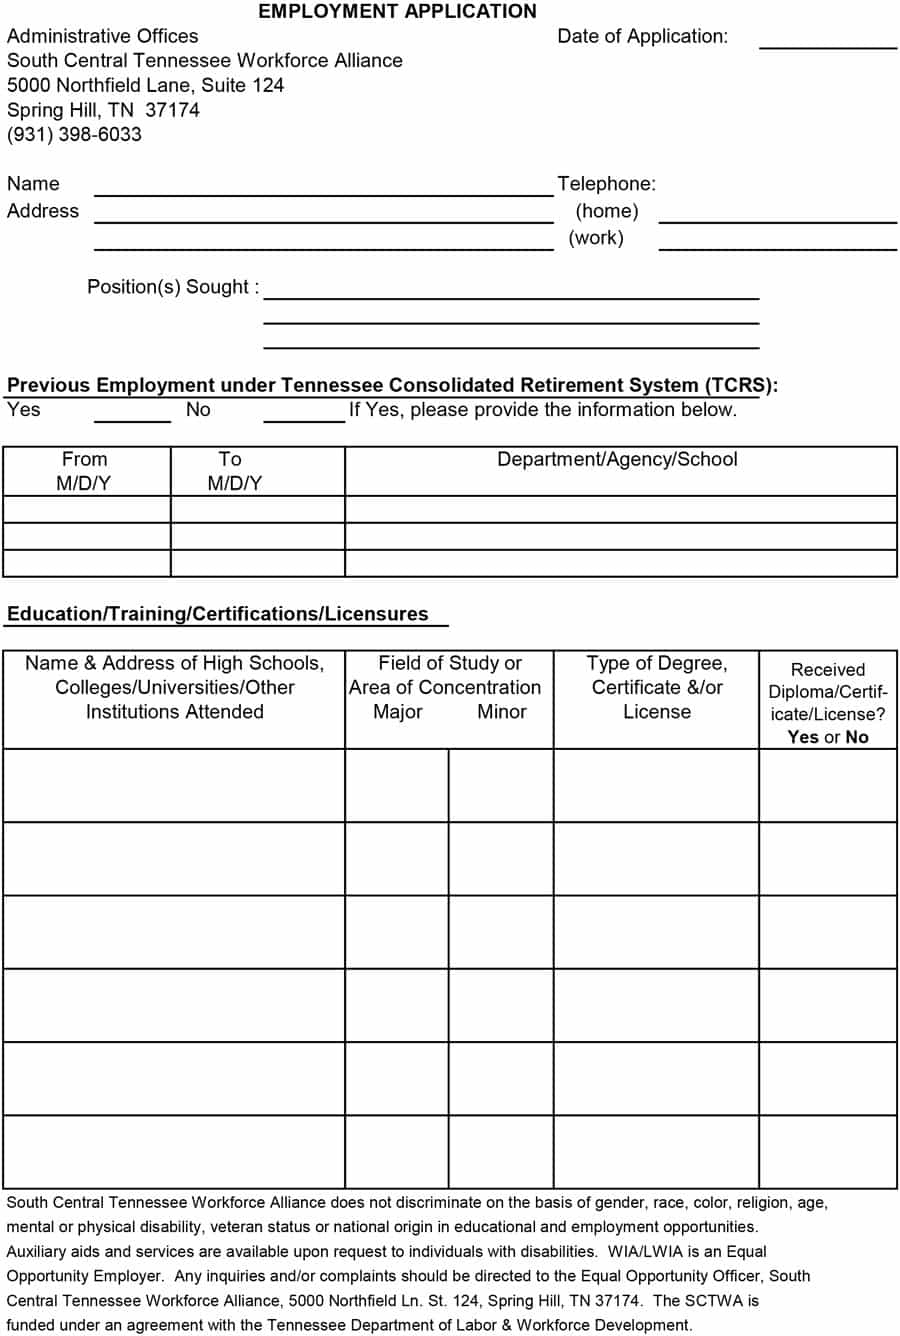 50 Free Employment / Job Application Form Templates [Printable - Free Printable Application For Employment Template